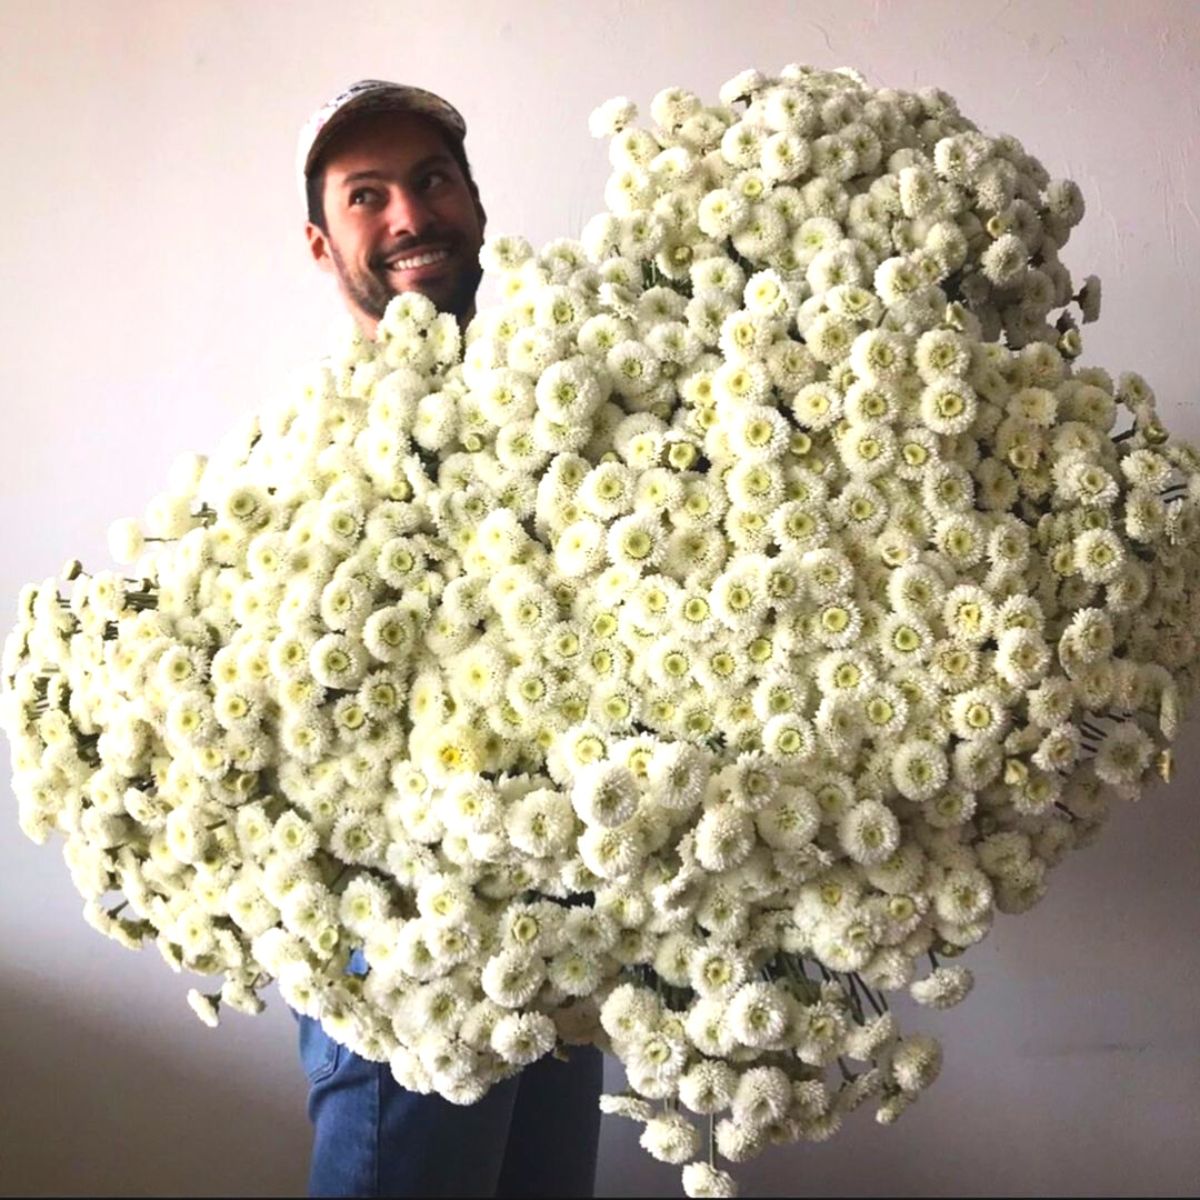 Julio Freitas with white chrysanthemums